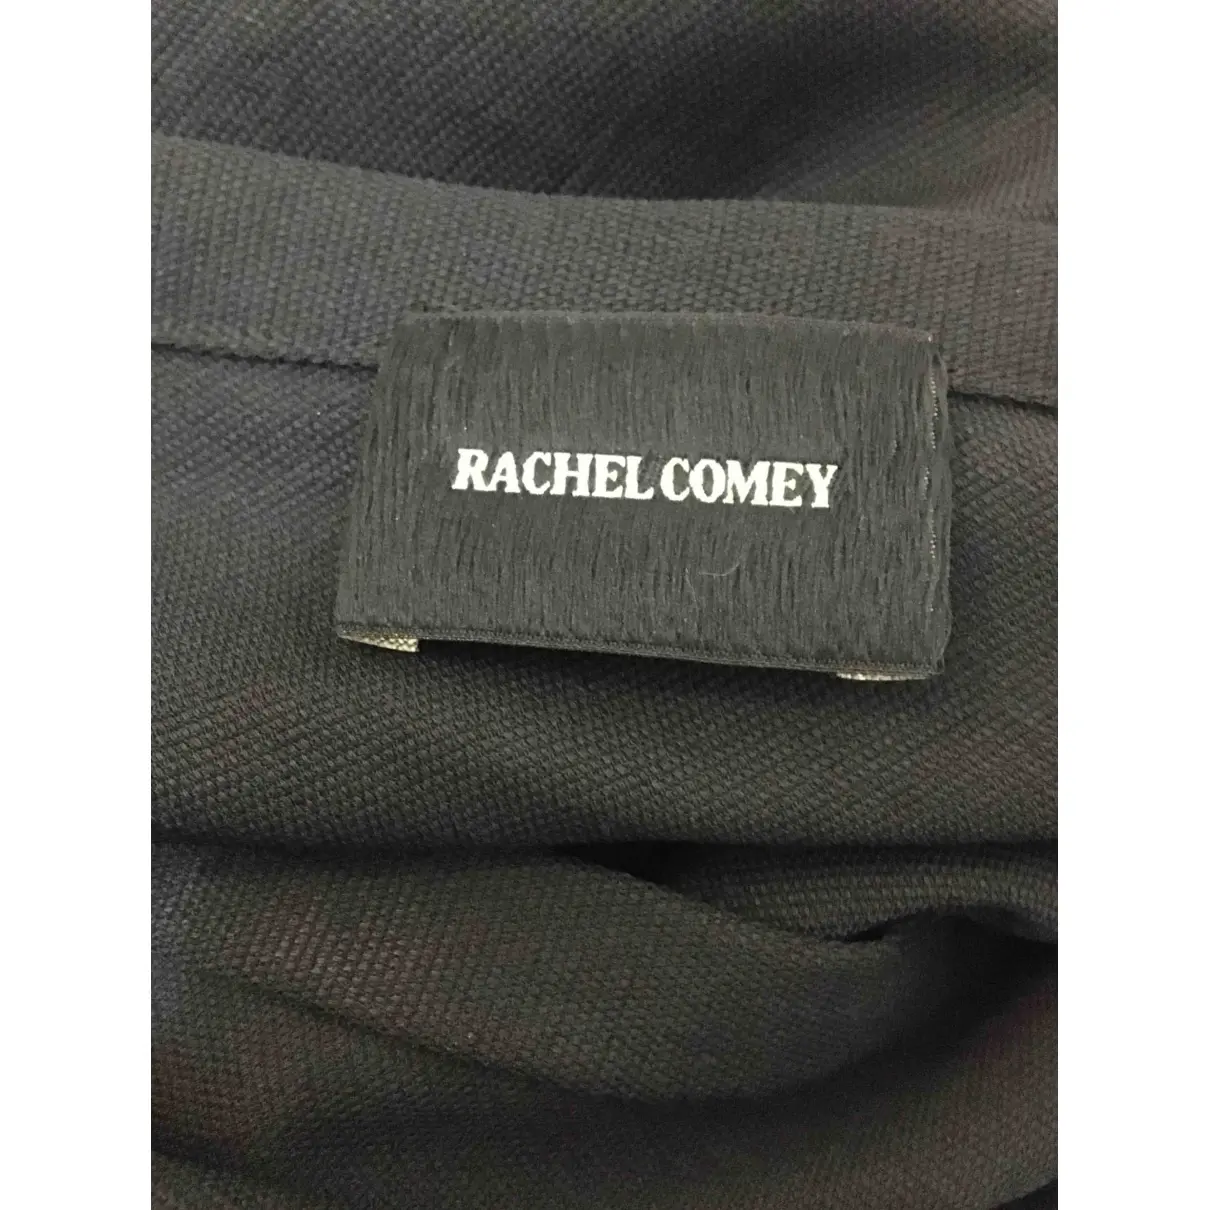 Black Polyester Top Rachel Comey